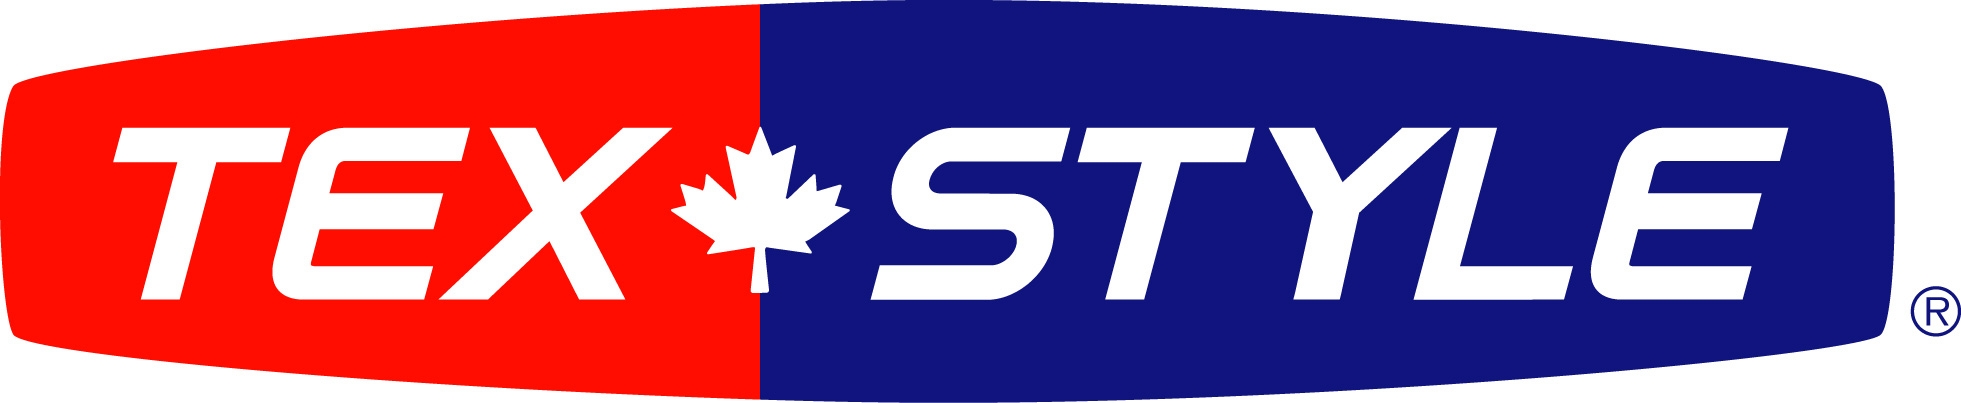 FInal Textstyle logo